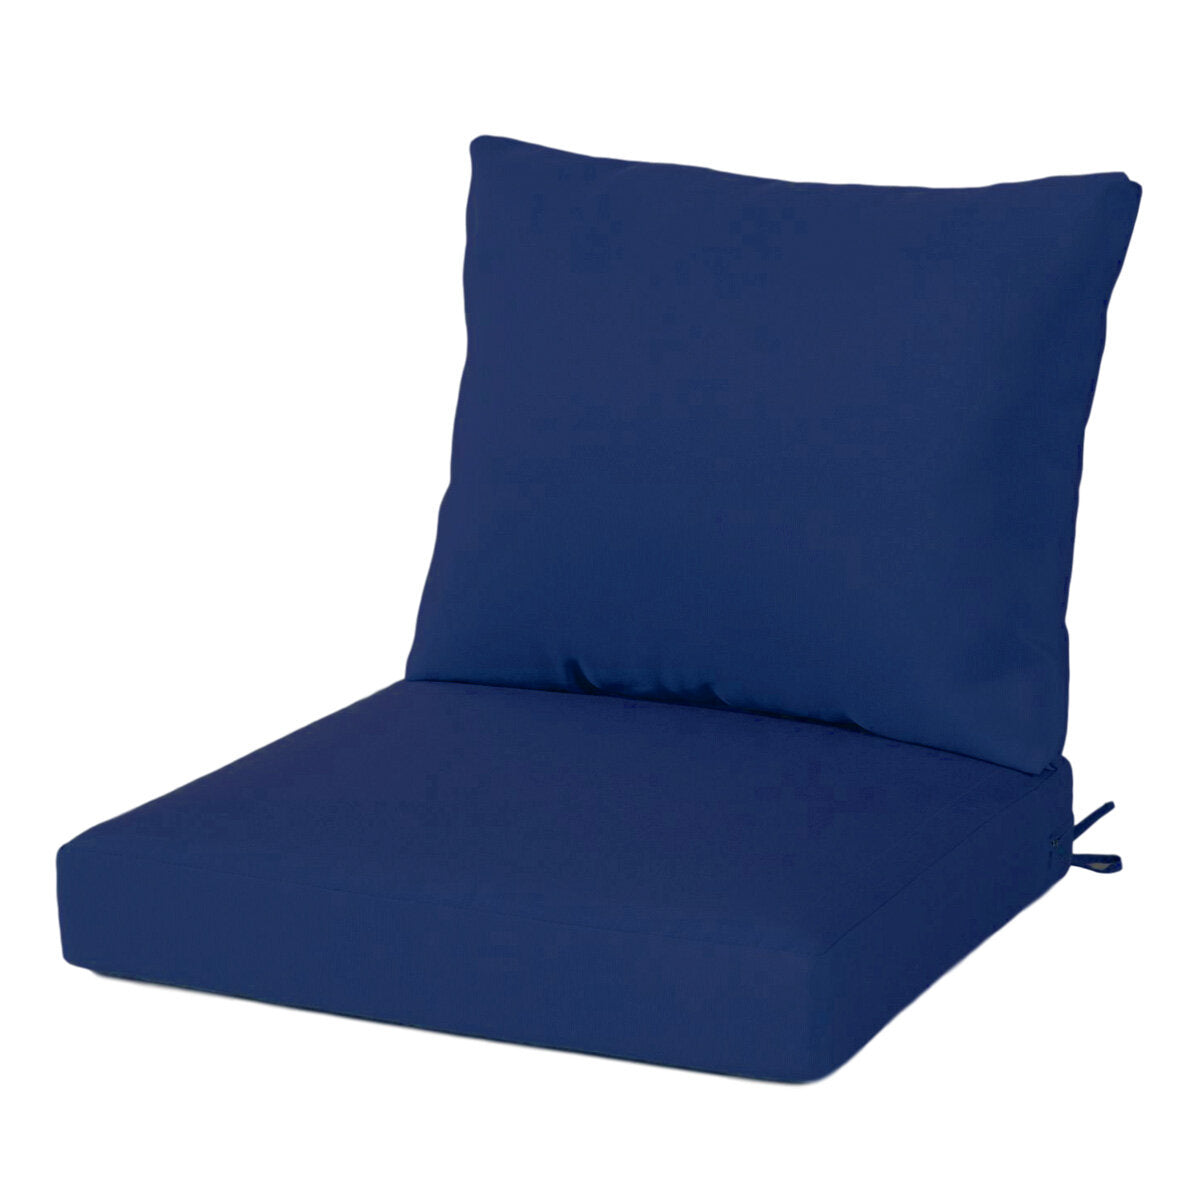 Deep Seat Cushion Set With Ties Outdoor Garden Patio High Rebound Foam Patio